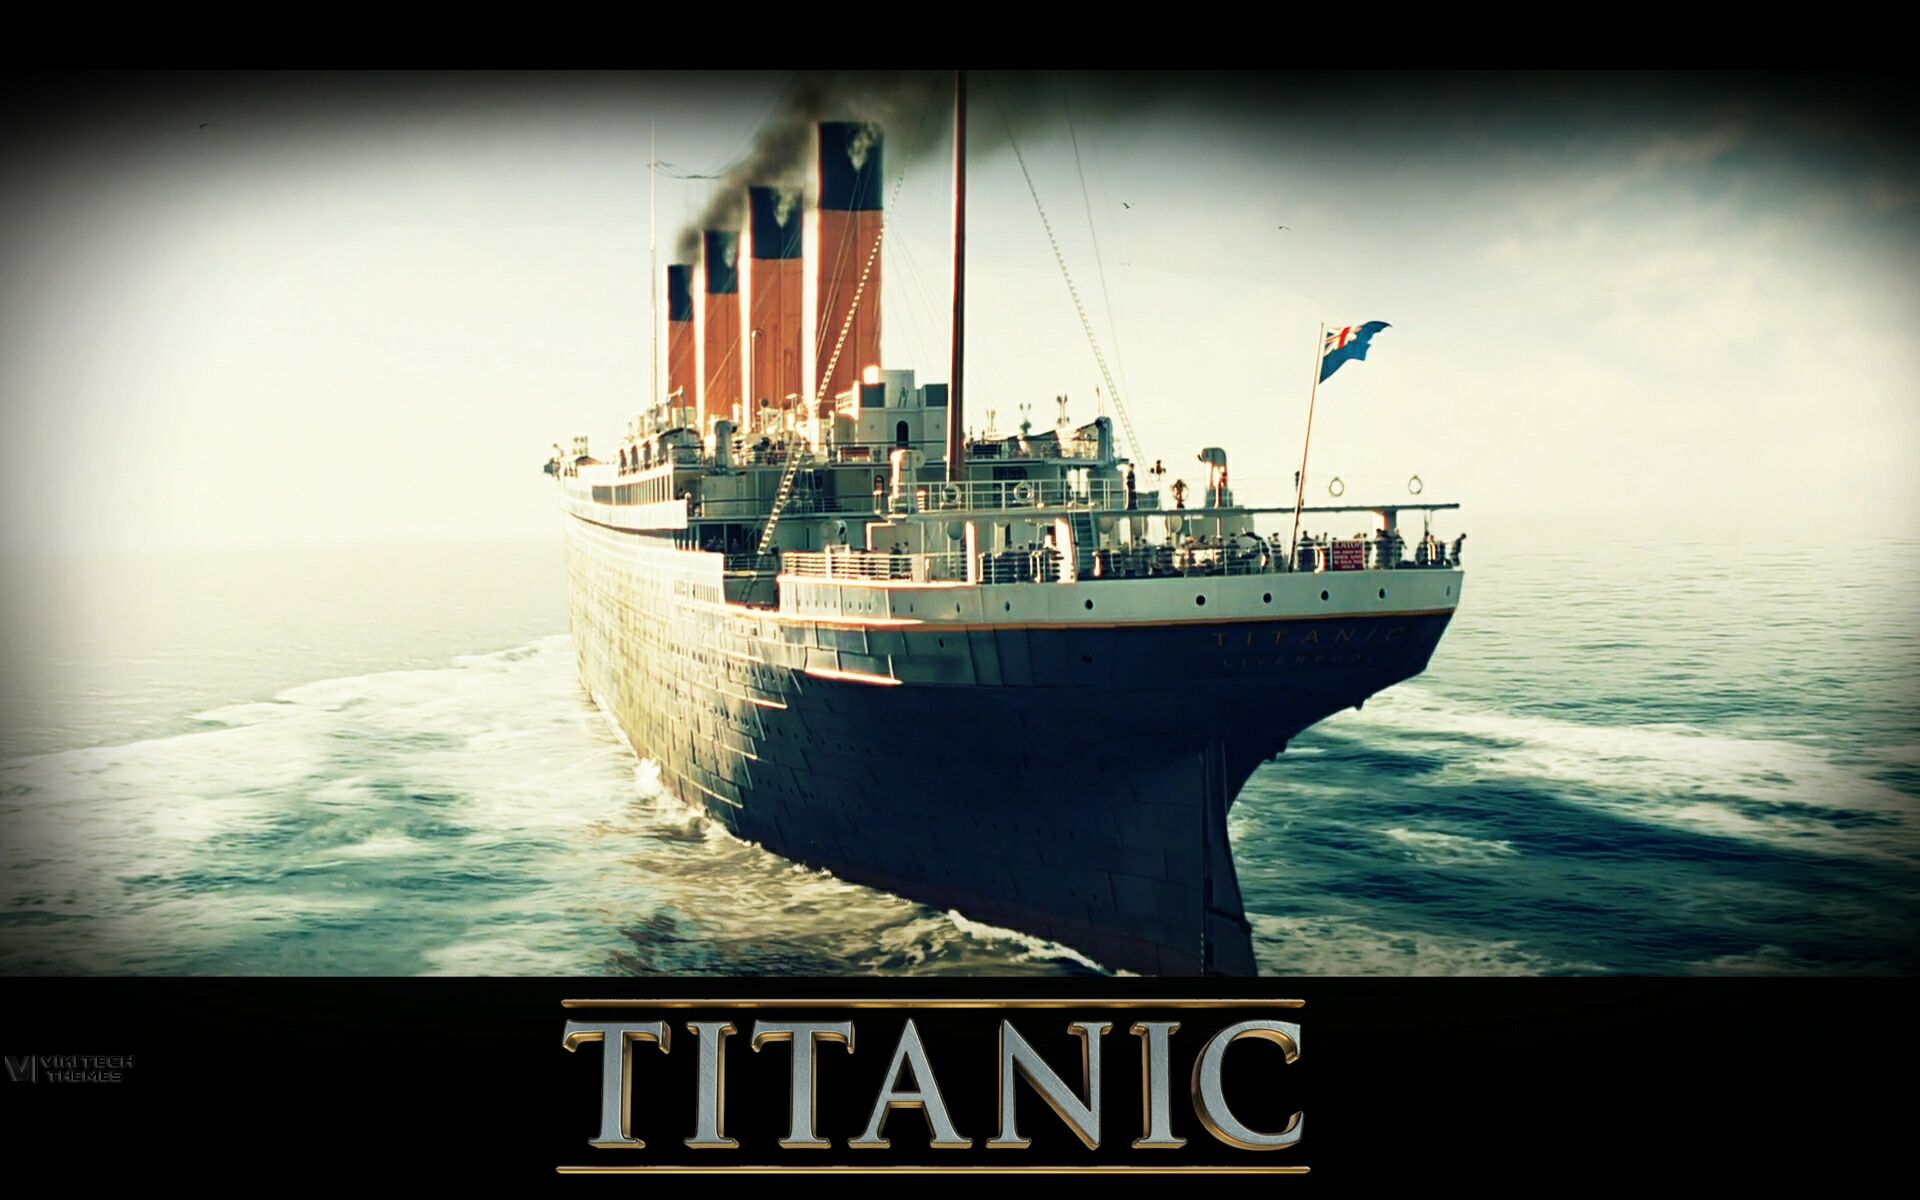 Titanic wallpaper by shamsantiago on